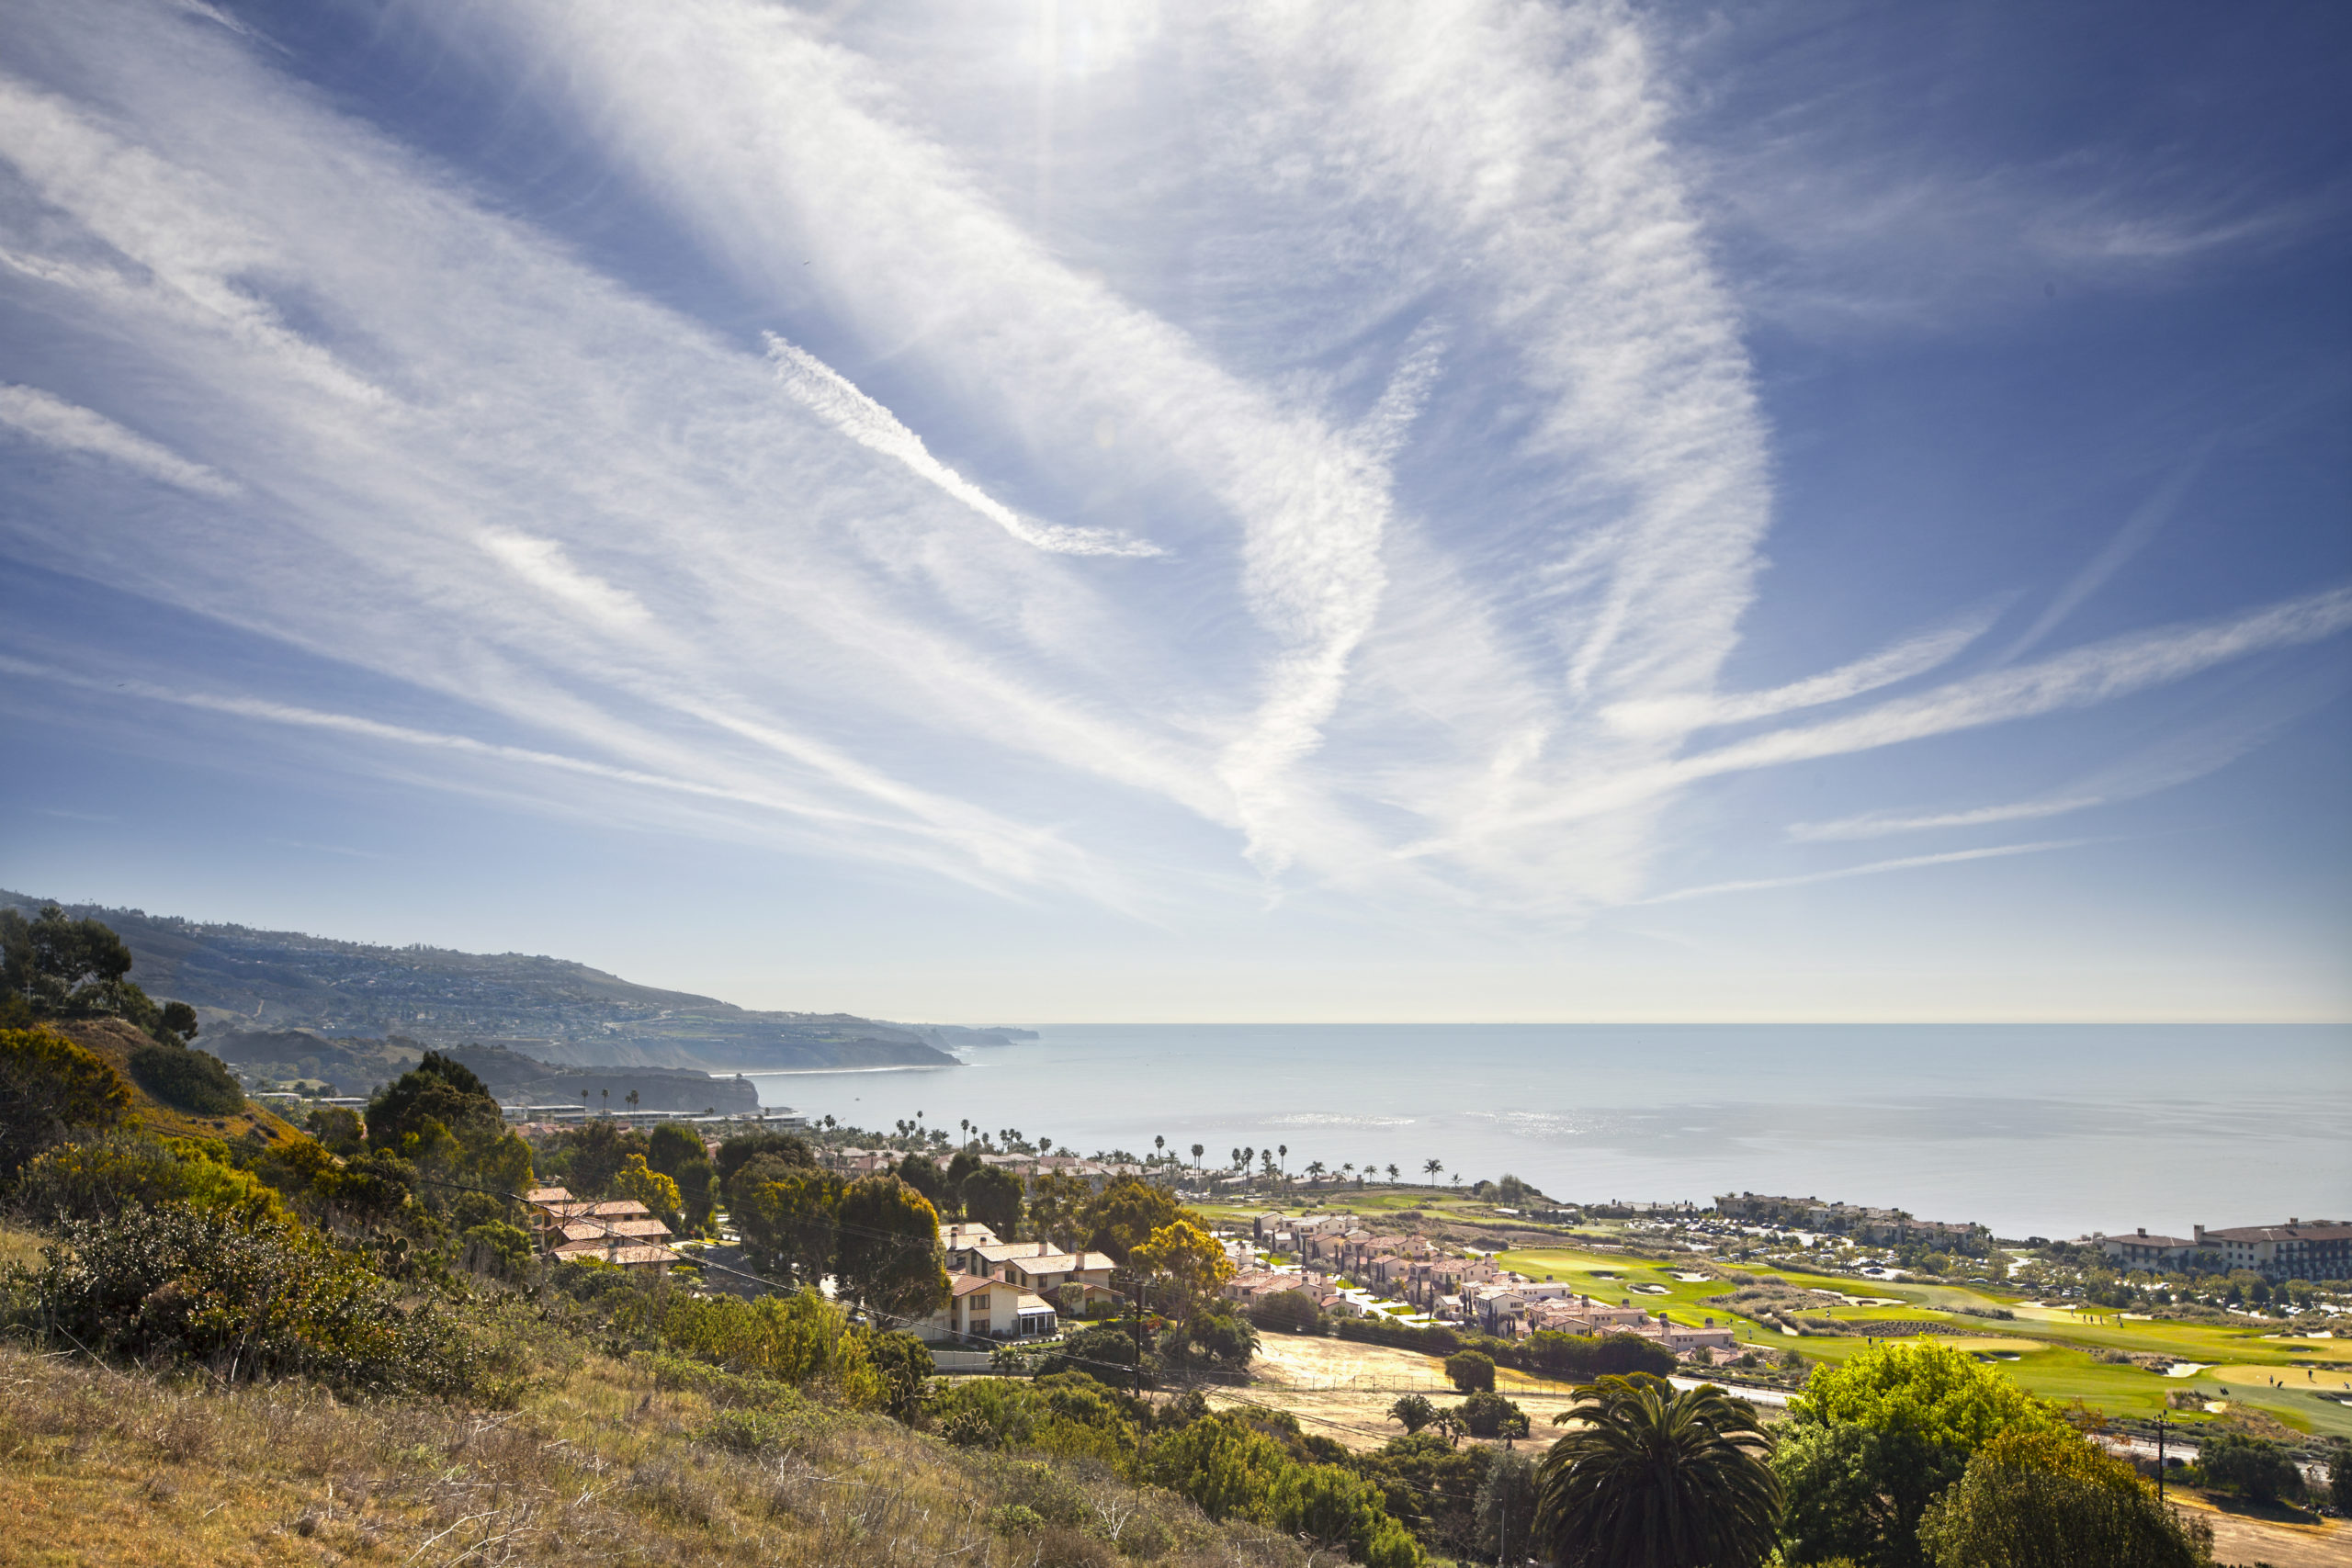 Palos Verdes Homes & Ocean Views courtesy of Arvin Design